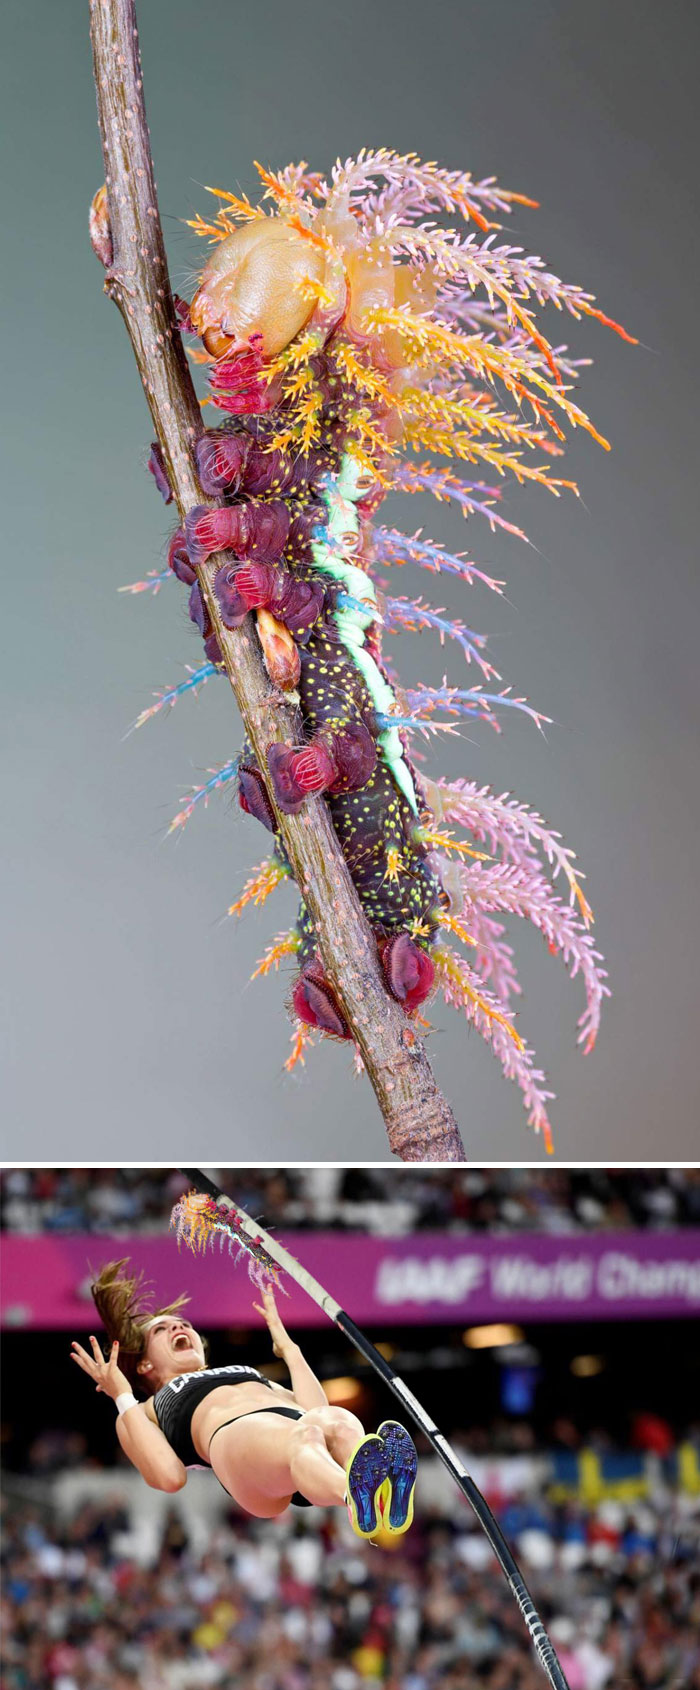 The Saturniidae Moth Caterpillar